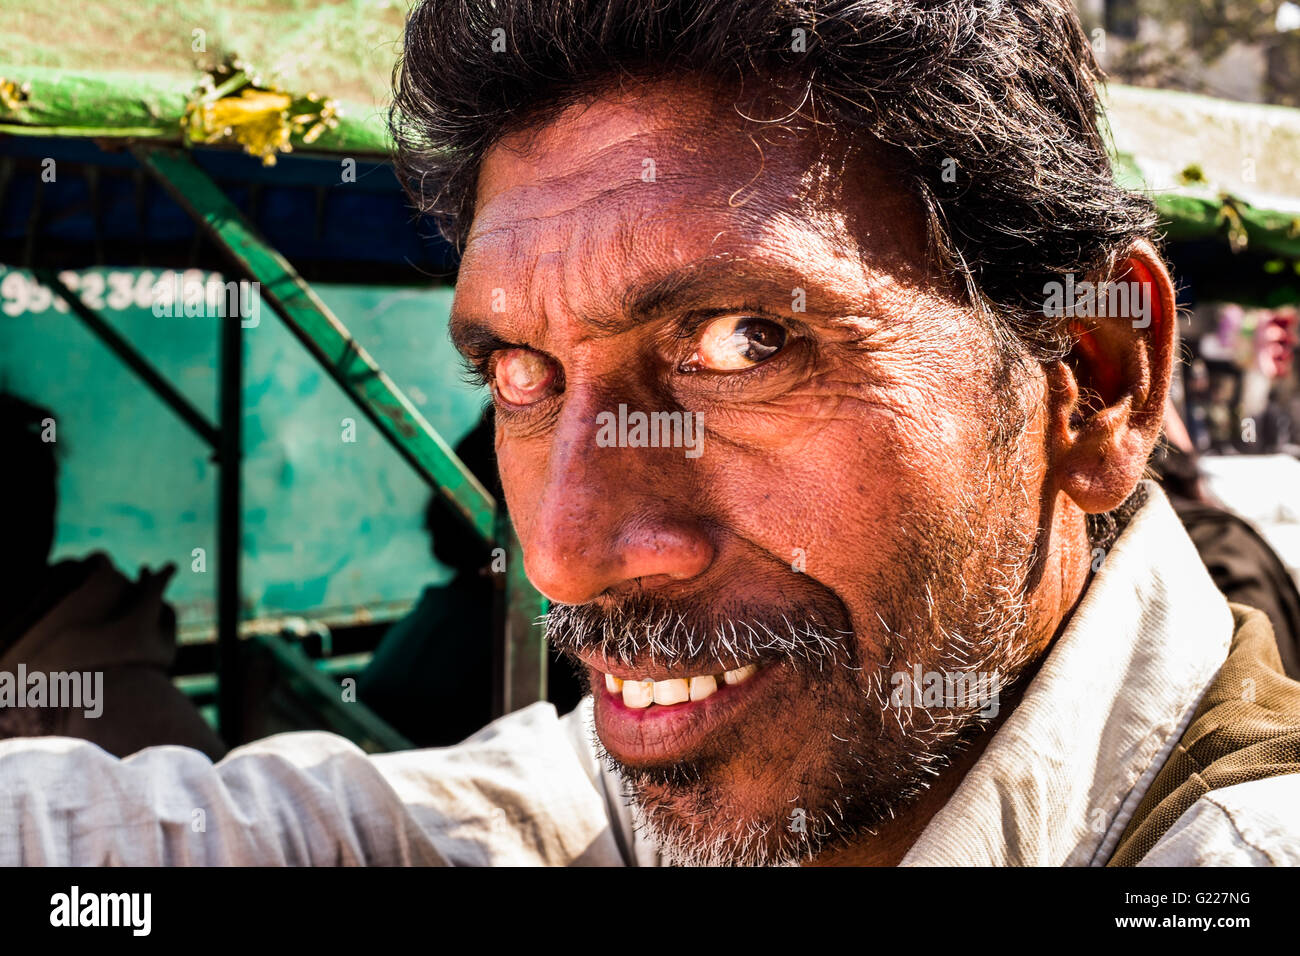 Man with one eye, Delhi, India Stock Photo